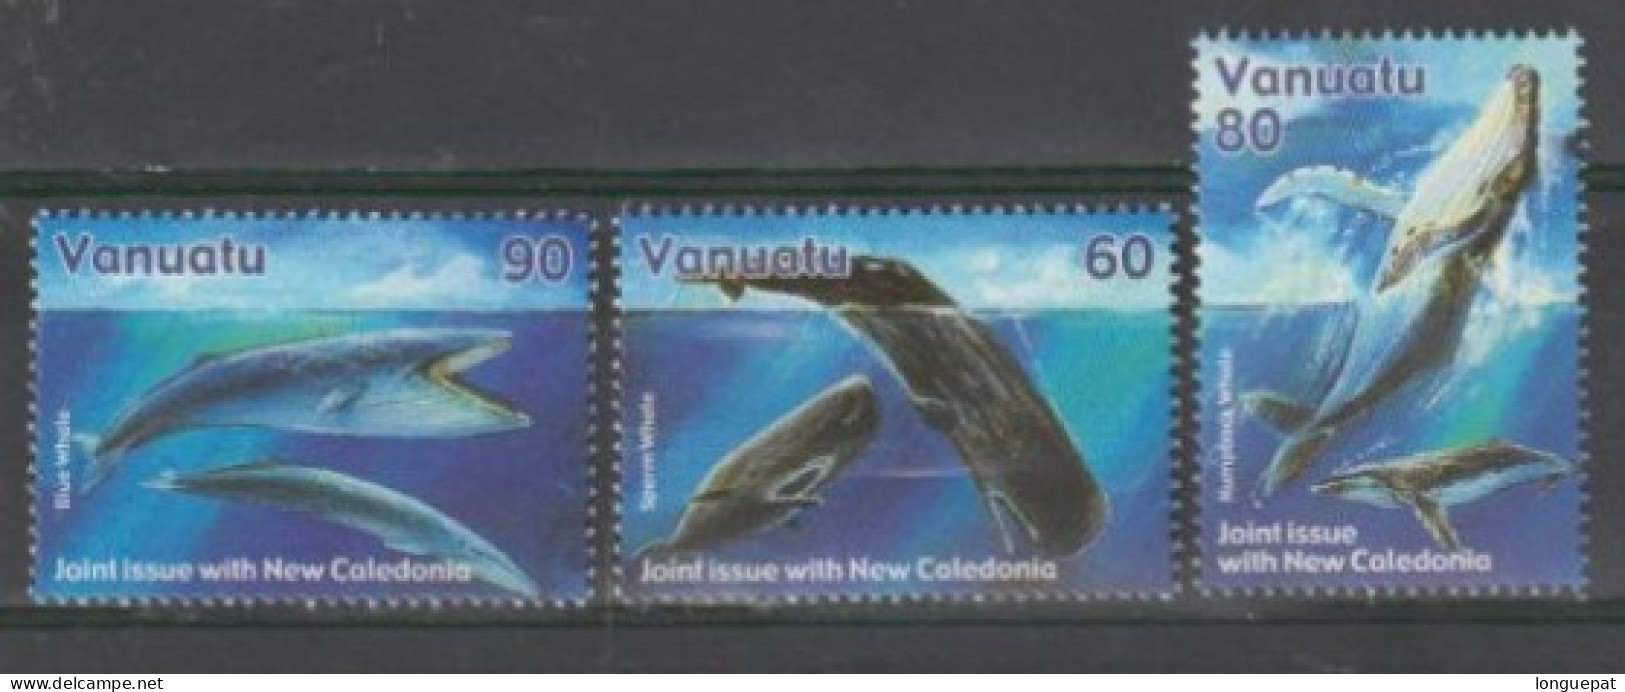 VANUATU - Faune Marine - Baleines : Cachalot, Baleine à Bosse, Baleine Bleue - Cétacés - Mammifères - - Whales